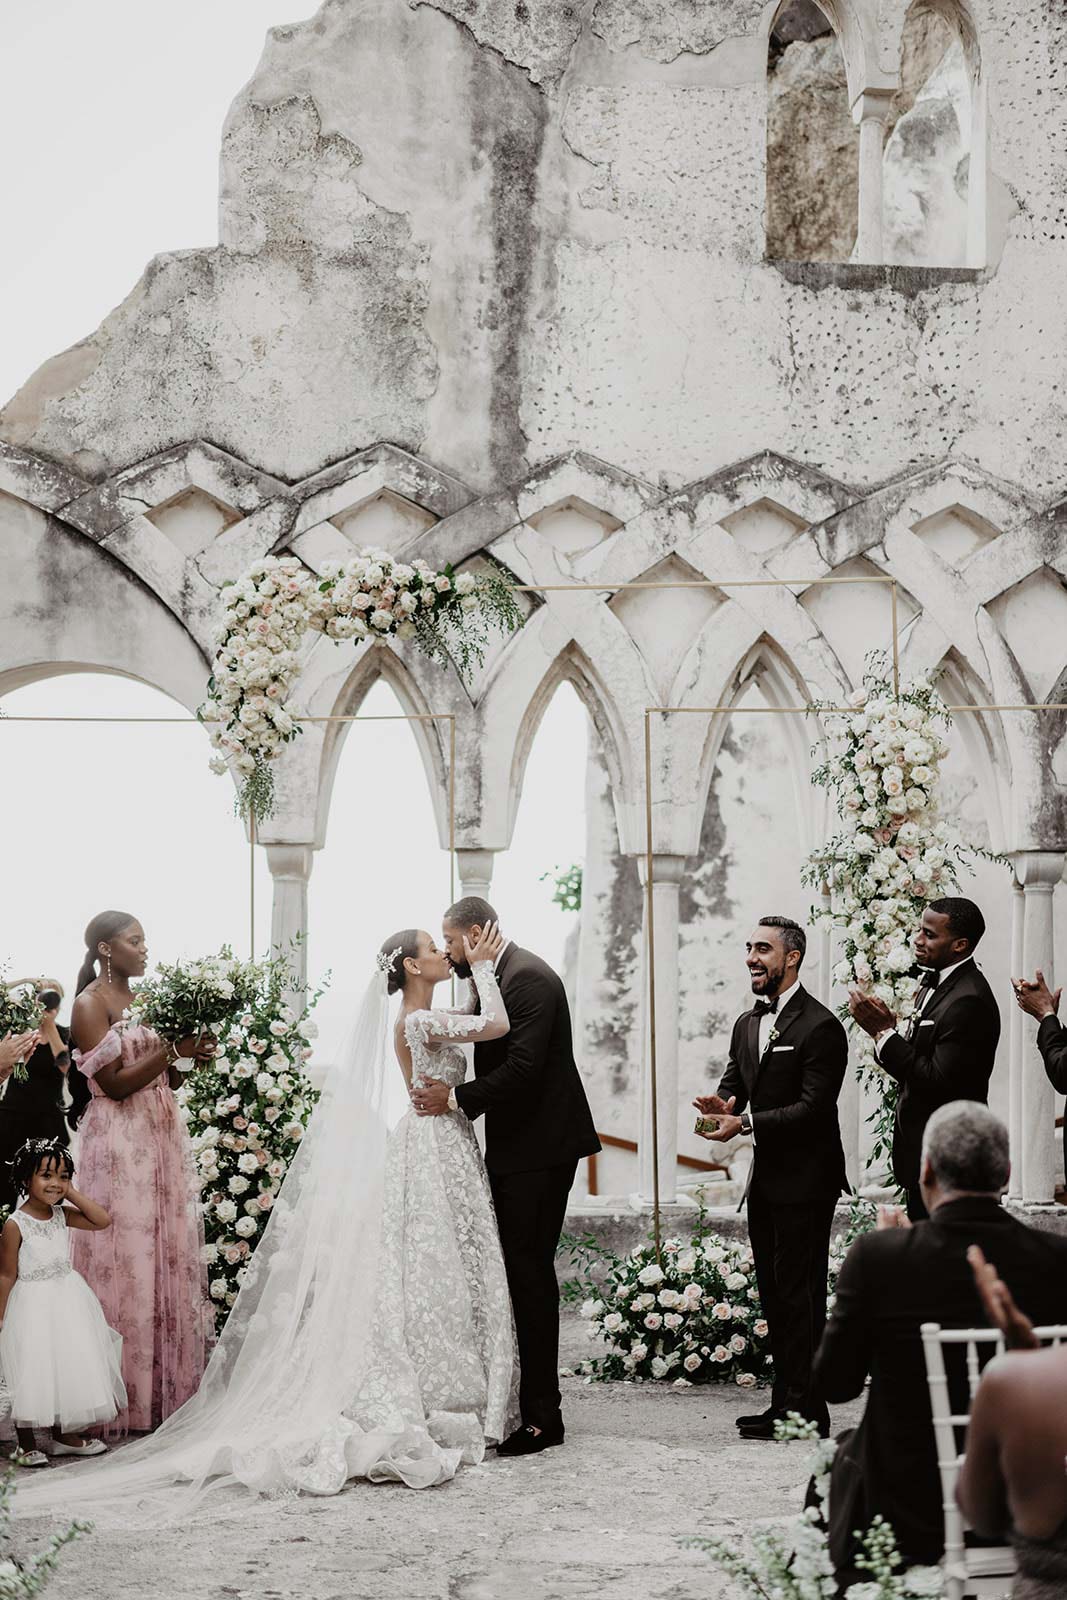 A stylish wedding in a historic cloister on the Amalfi Coast :: 21